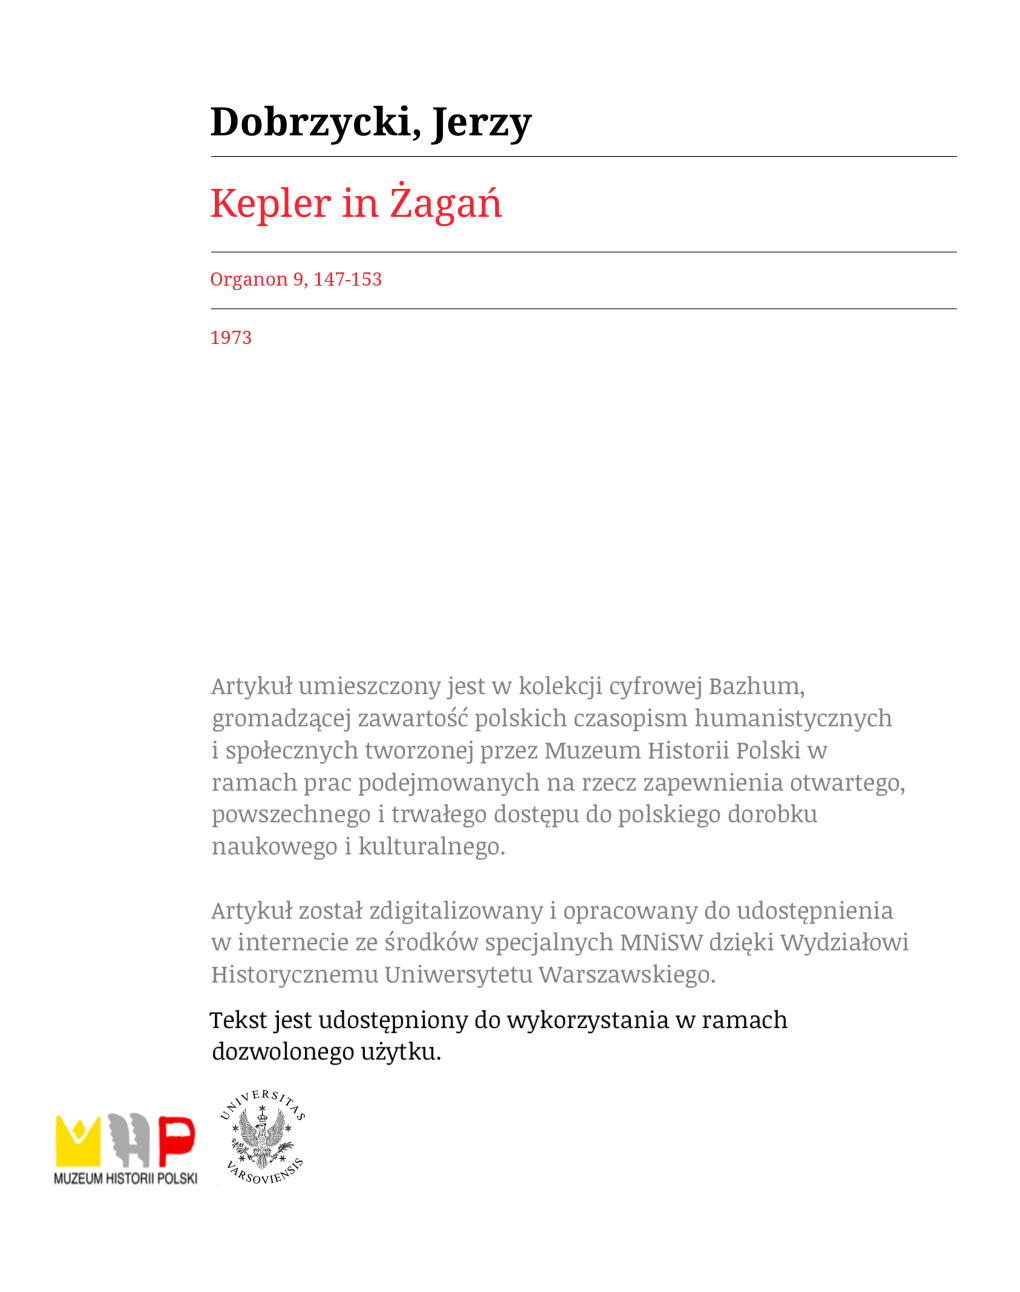 Kepler in Żagan